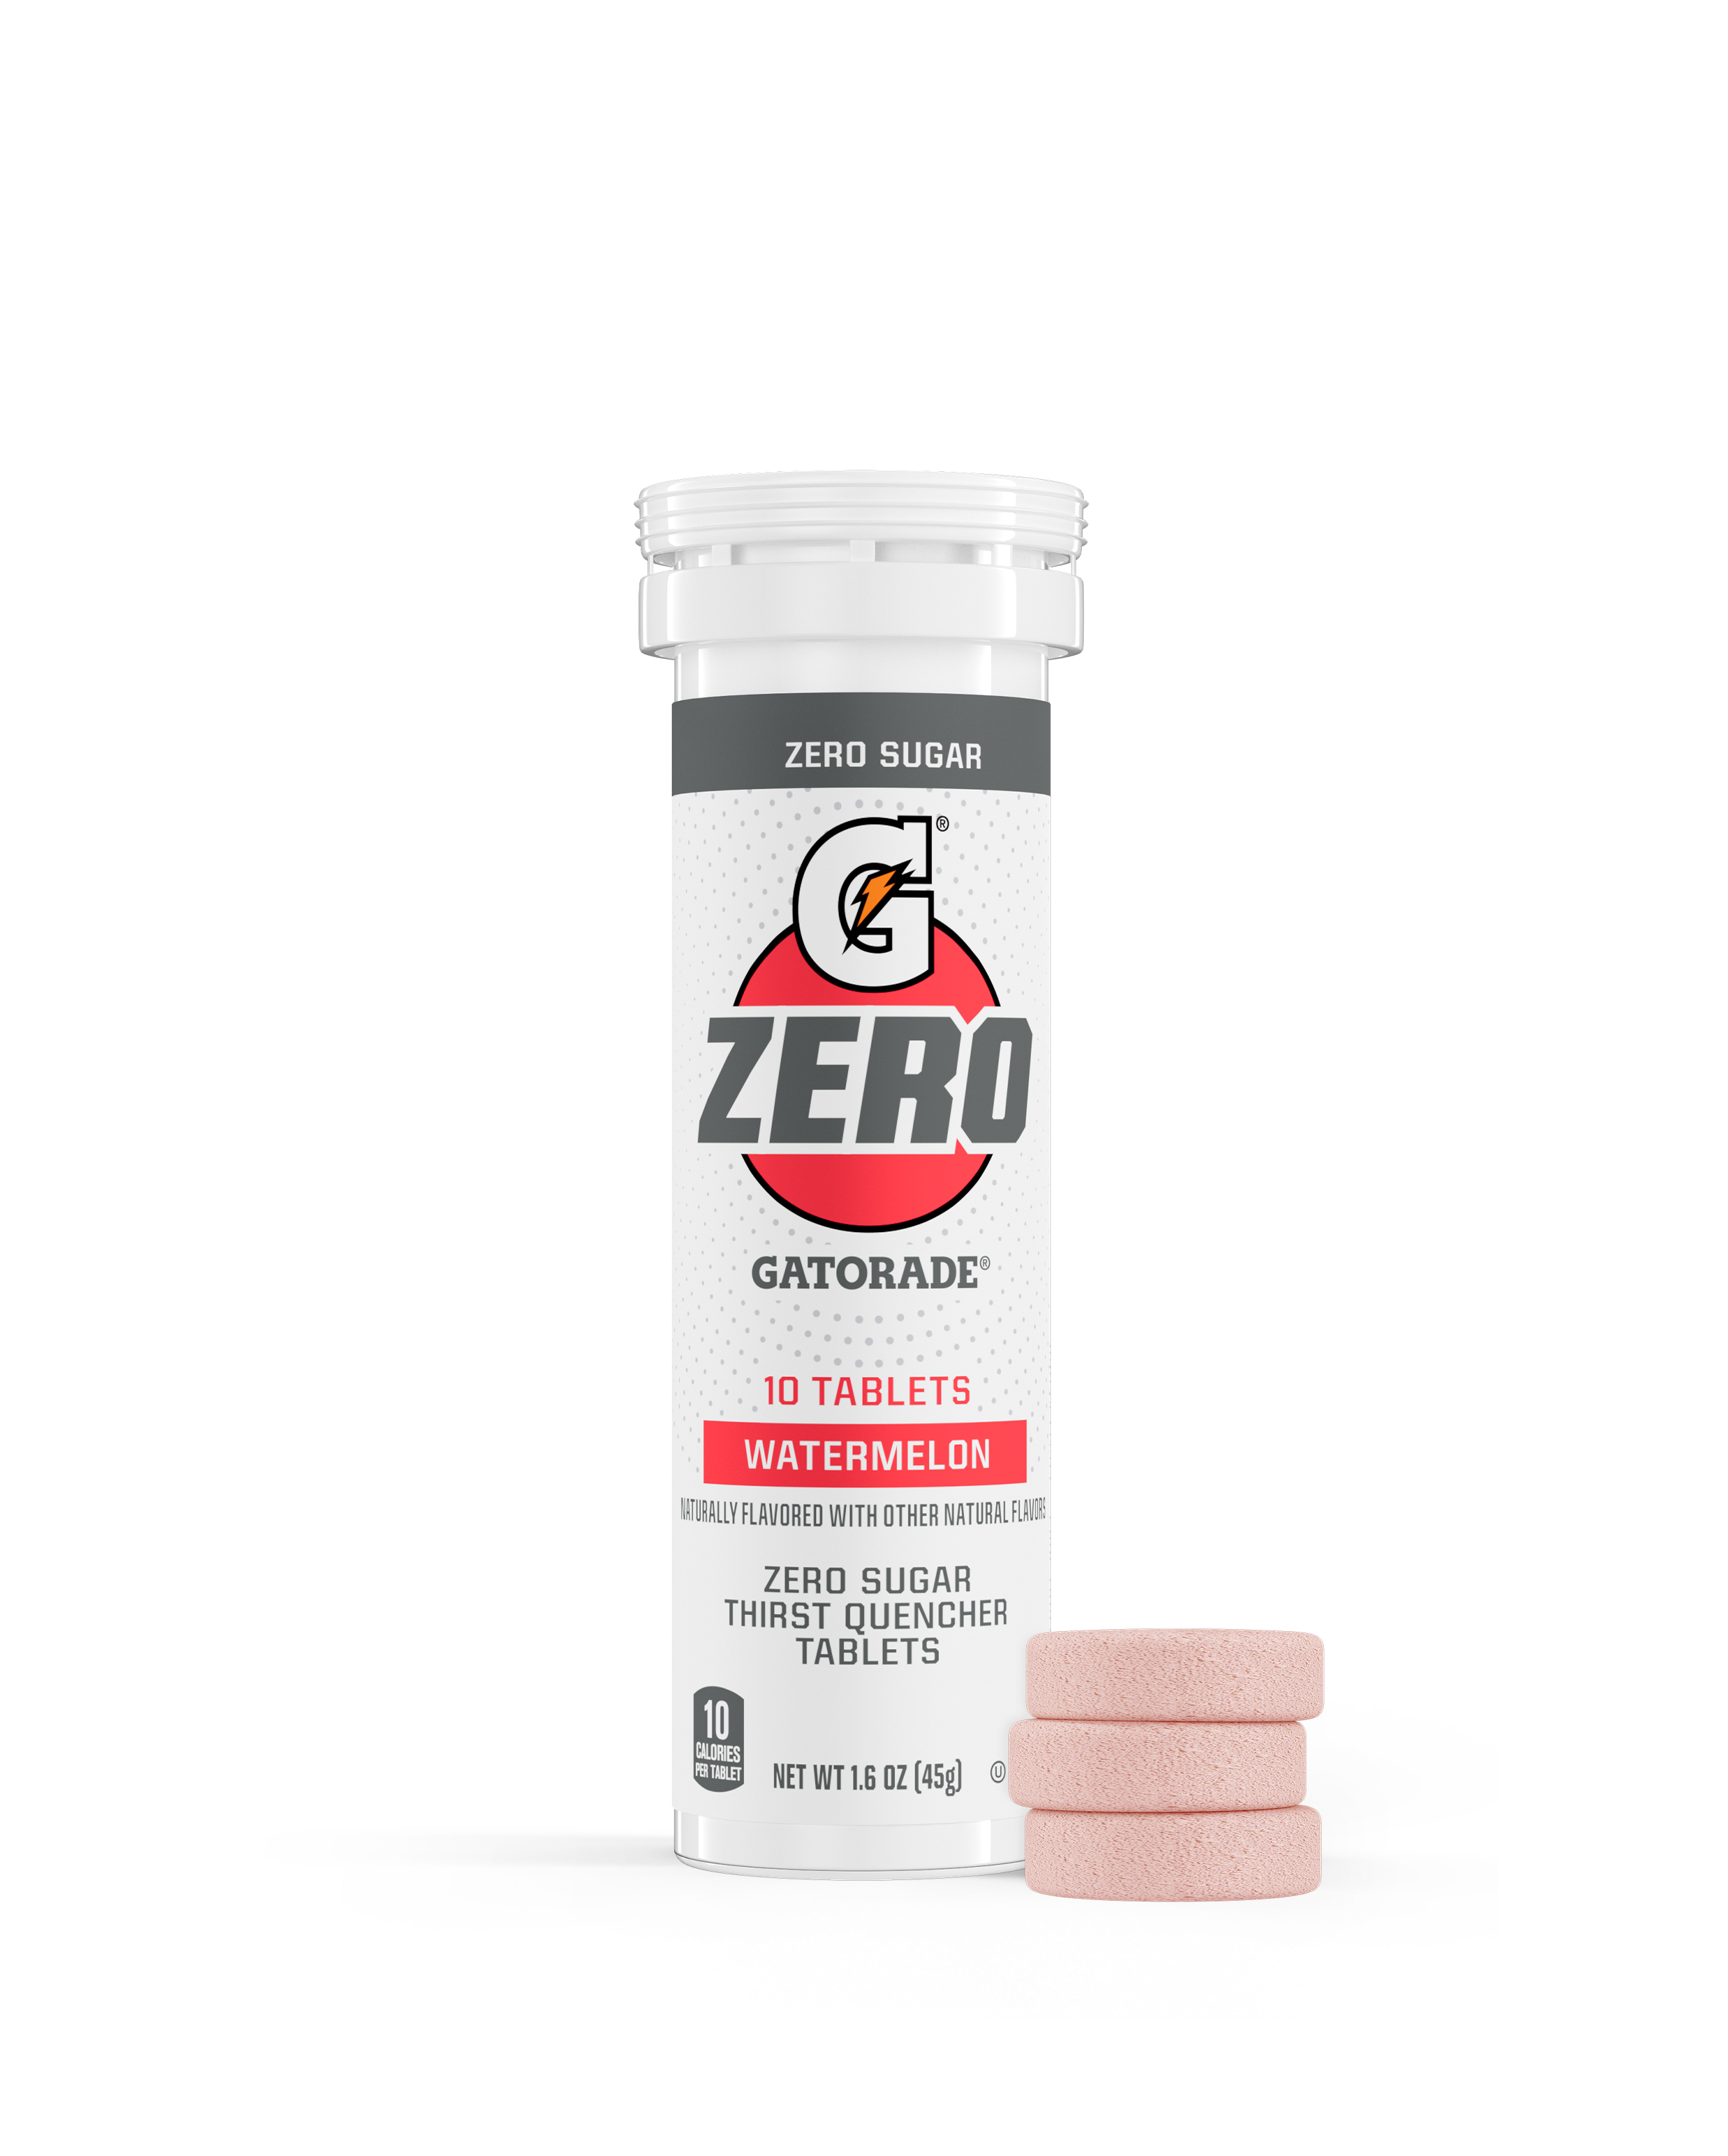 Gatorade Zero Watermelon Tablets Tile